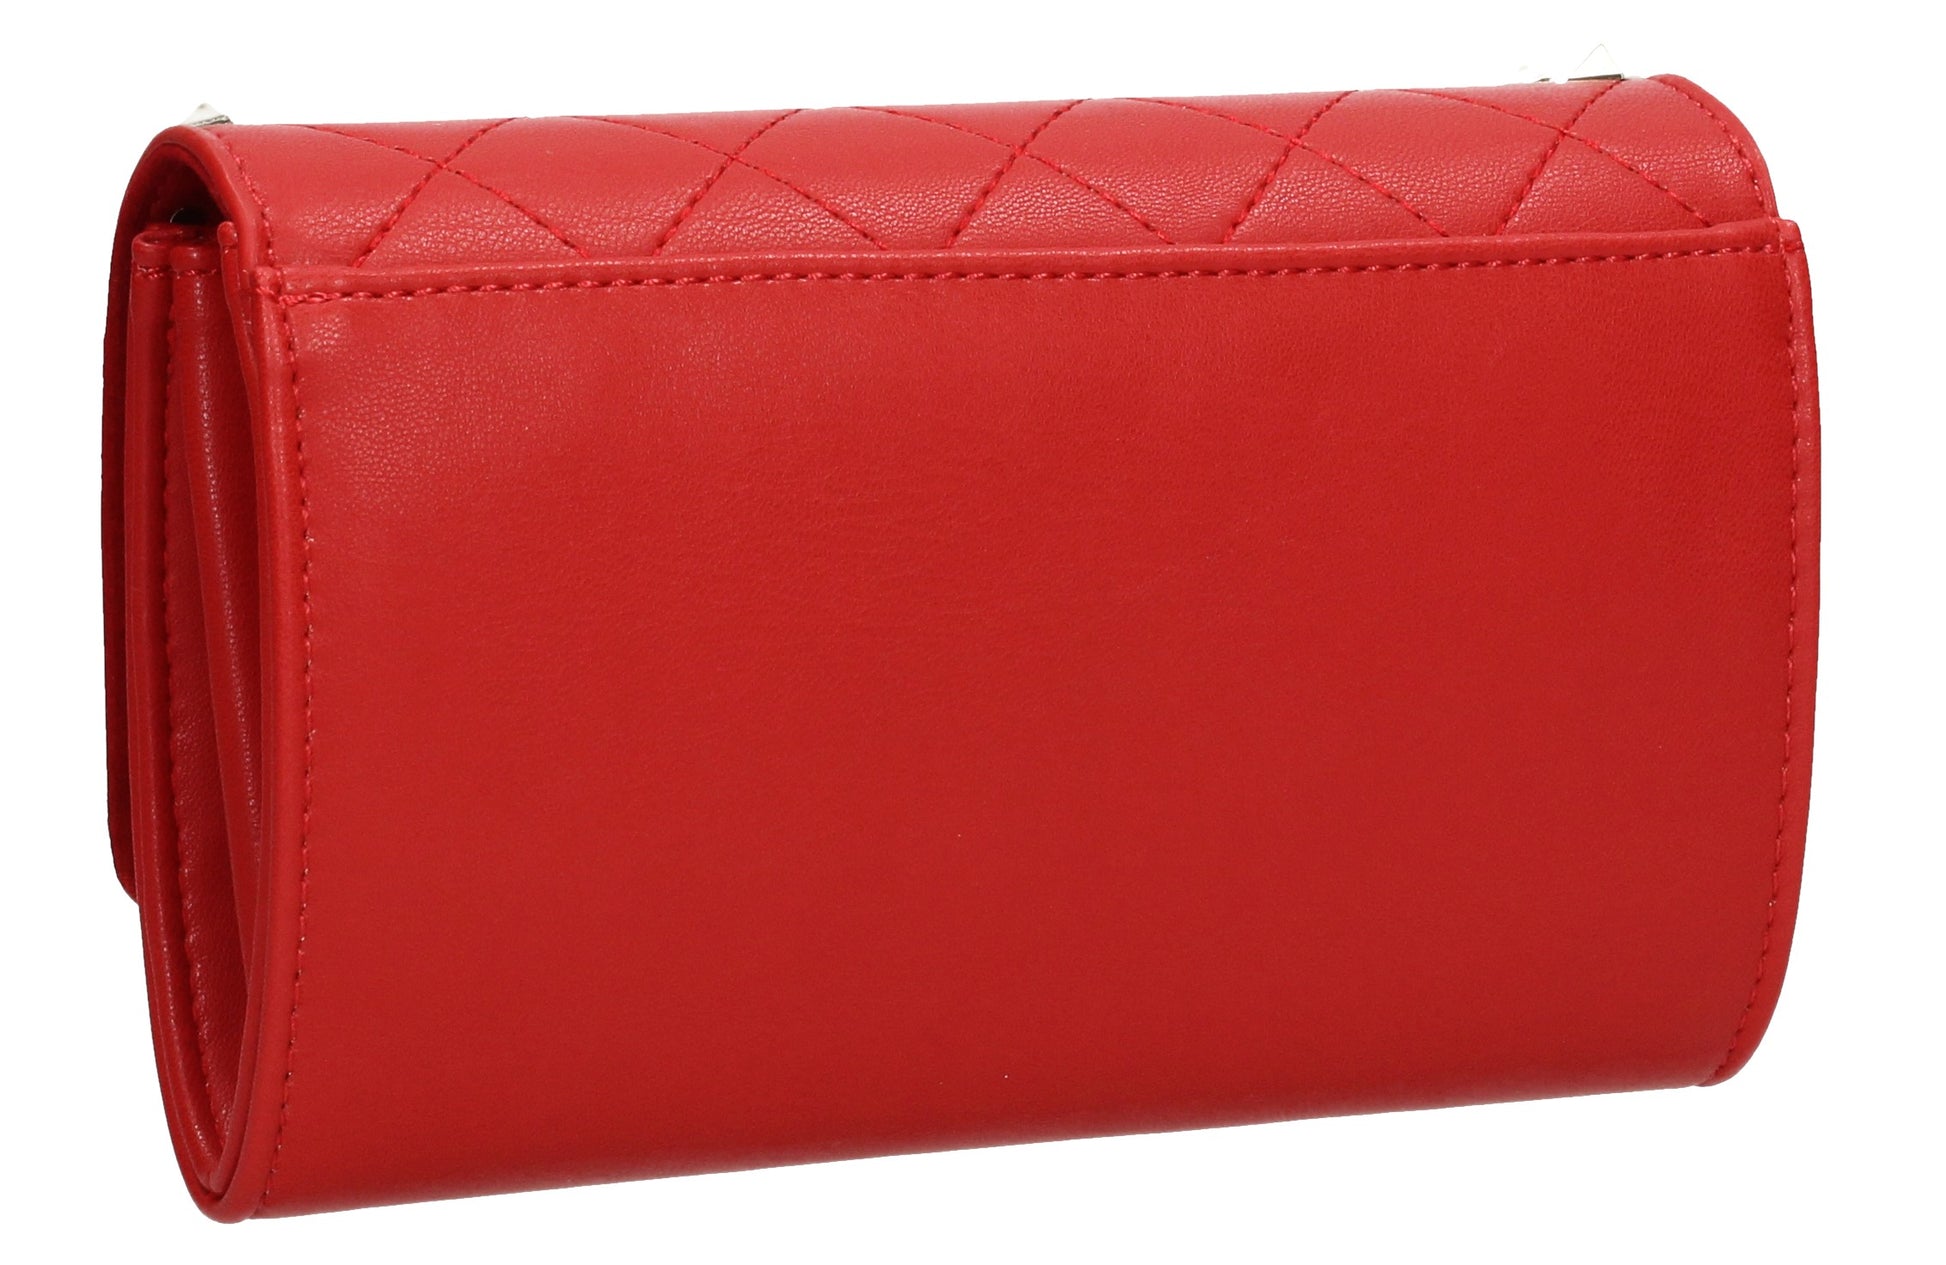 SWANKYSWANS Brittany Diamond Pattern Stud Clutch Bag Red Cute Cheap Clutch Bag For Weddings School and Work